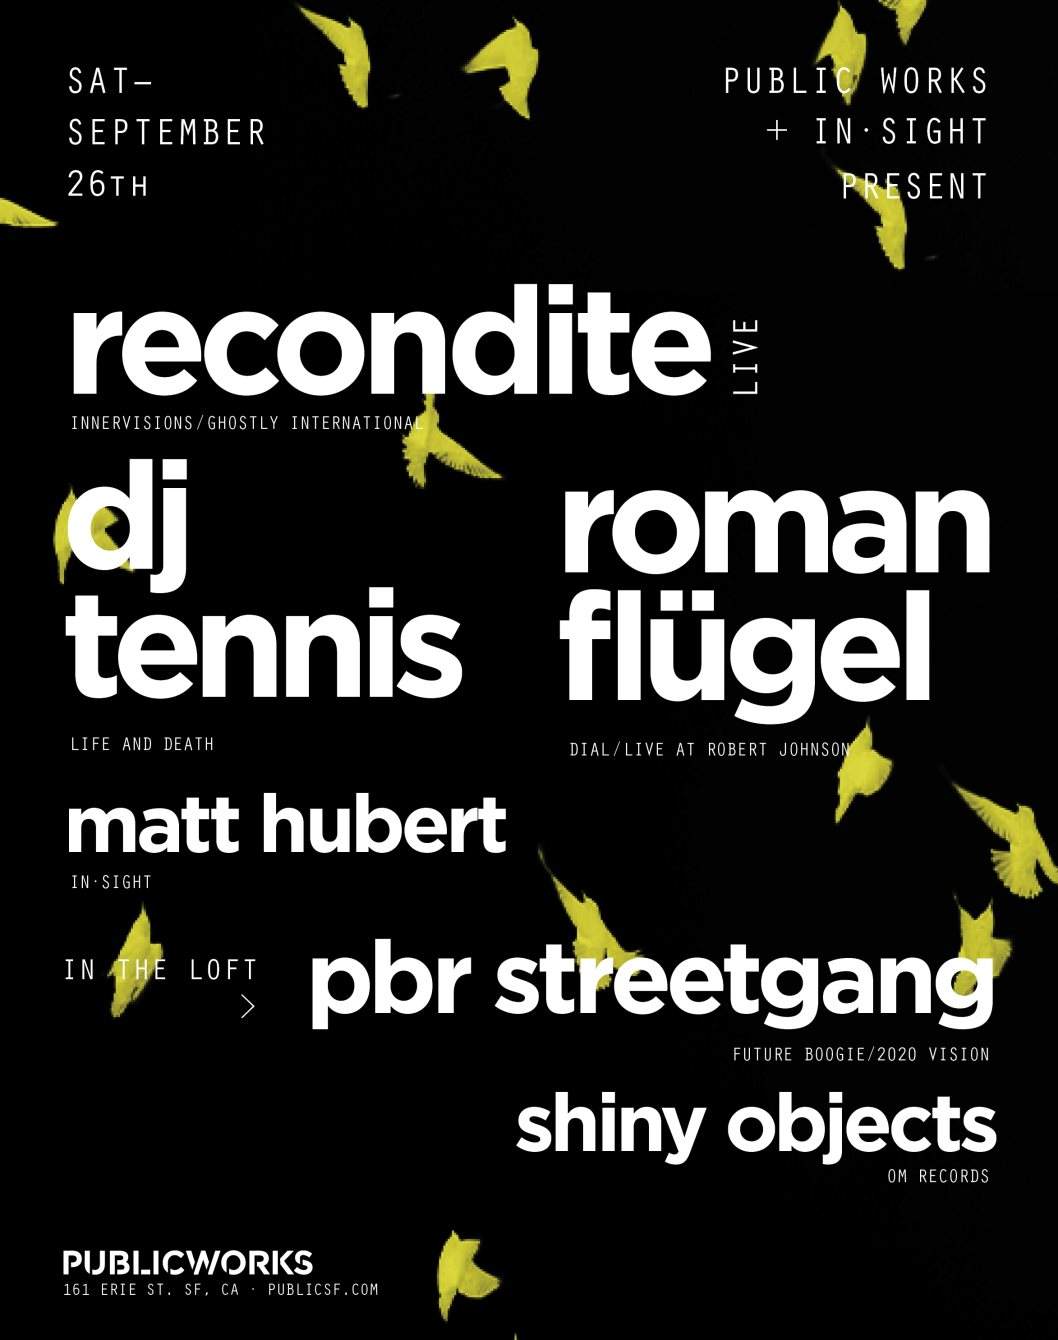 PW & In·sight present Recondite, DJ Tennis, Roman Flügel, PBR Streetgang - Página frontal